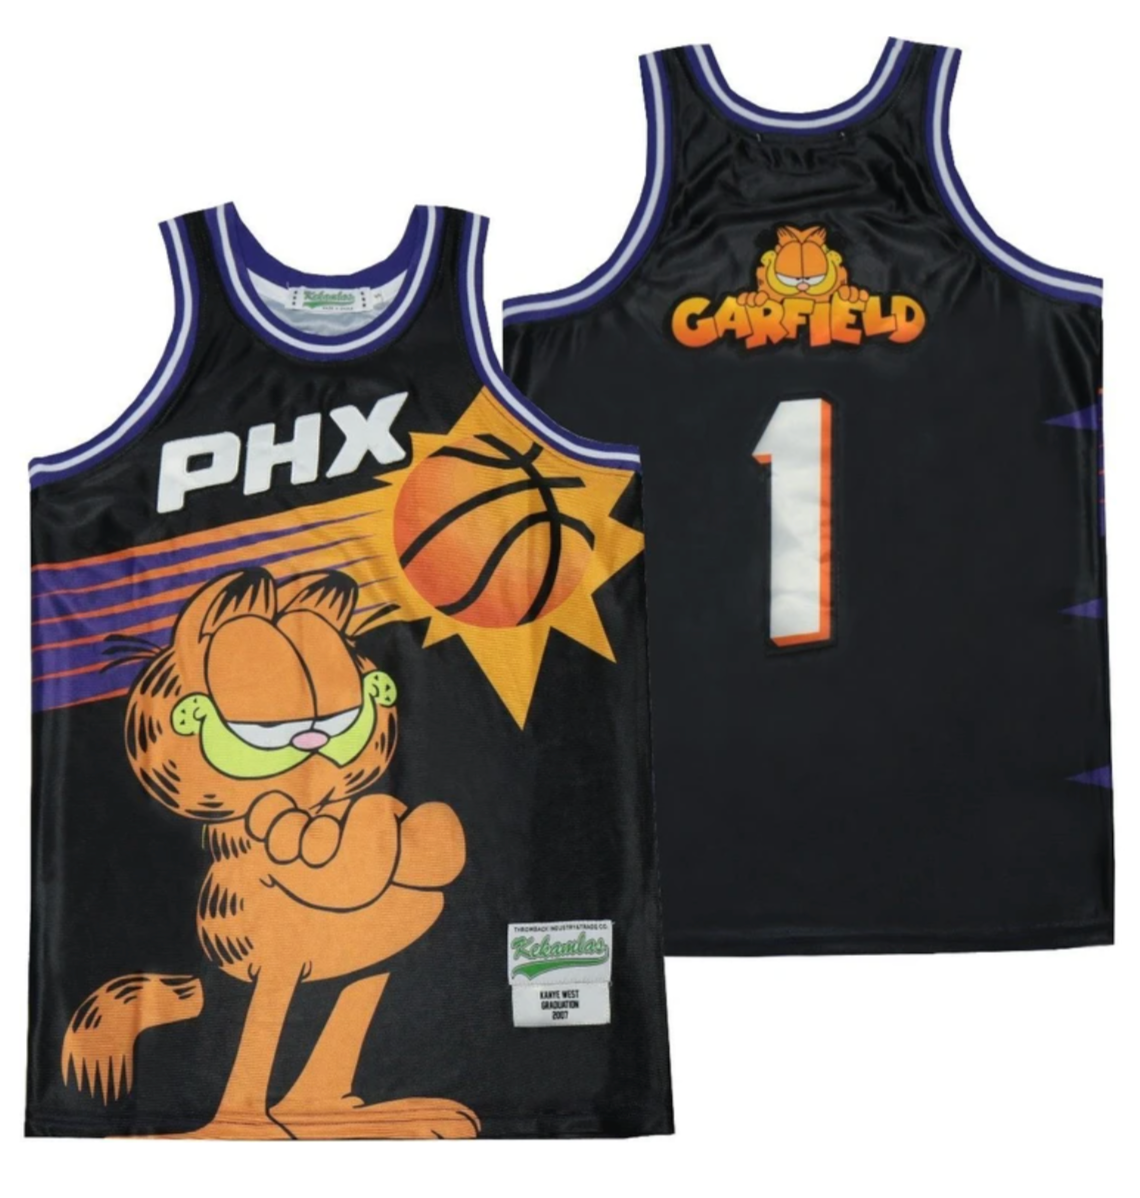 Garfield X Phoenix Jersey